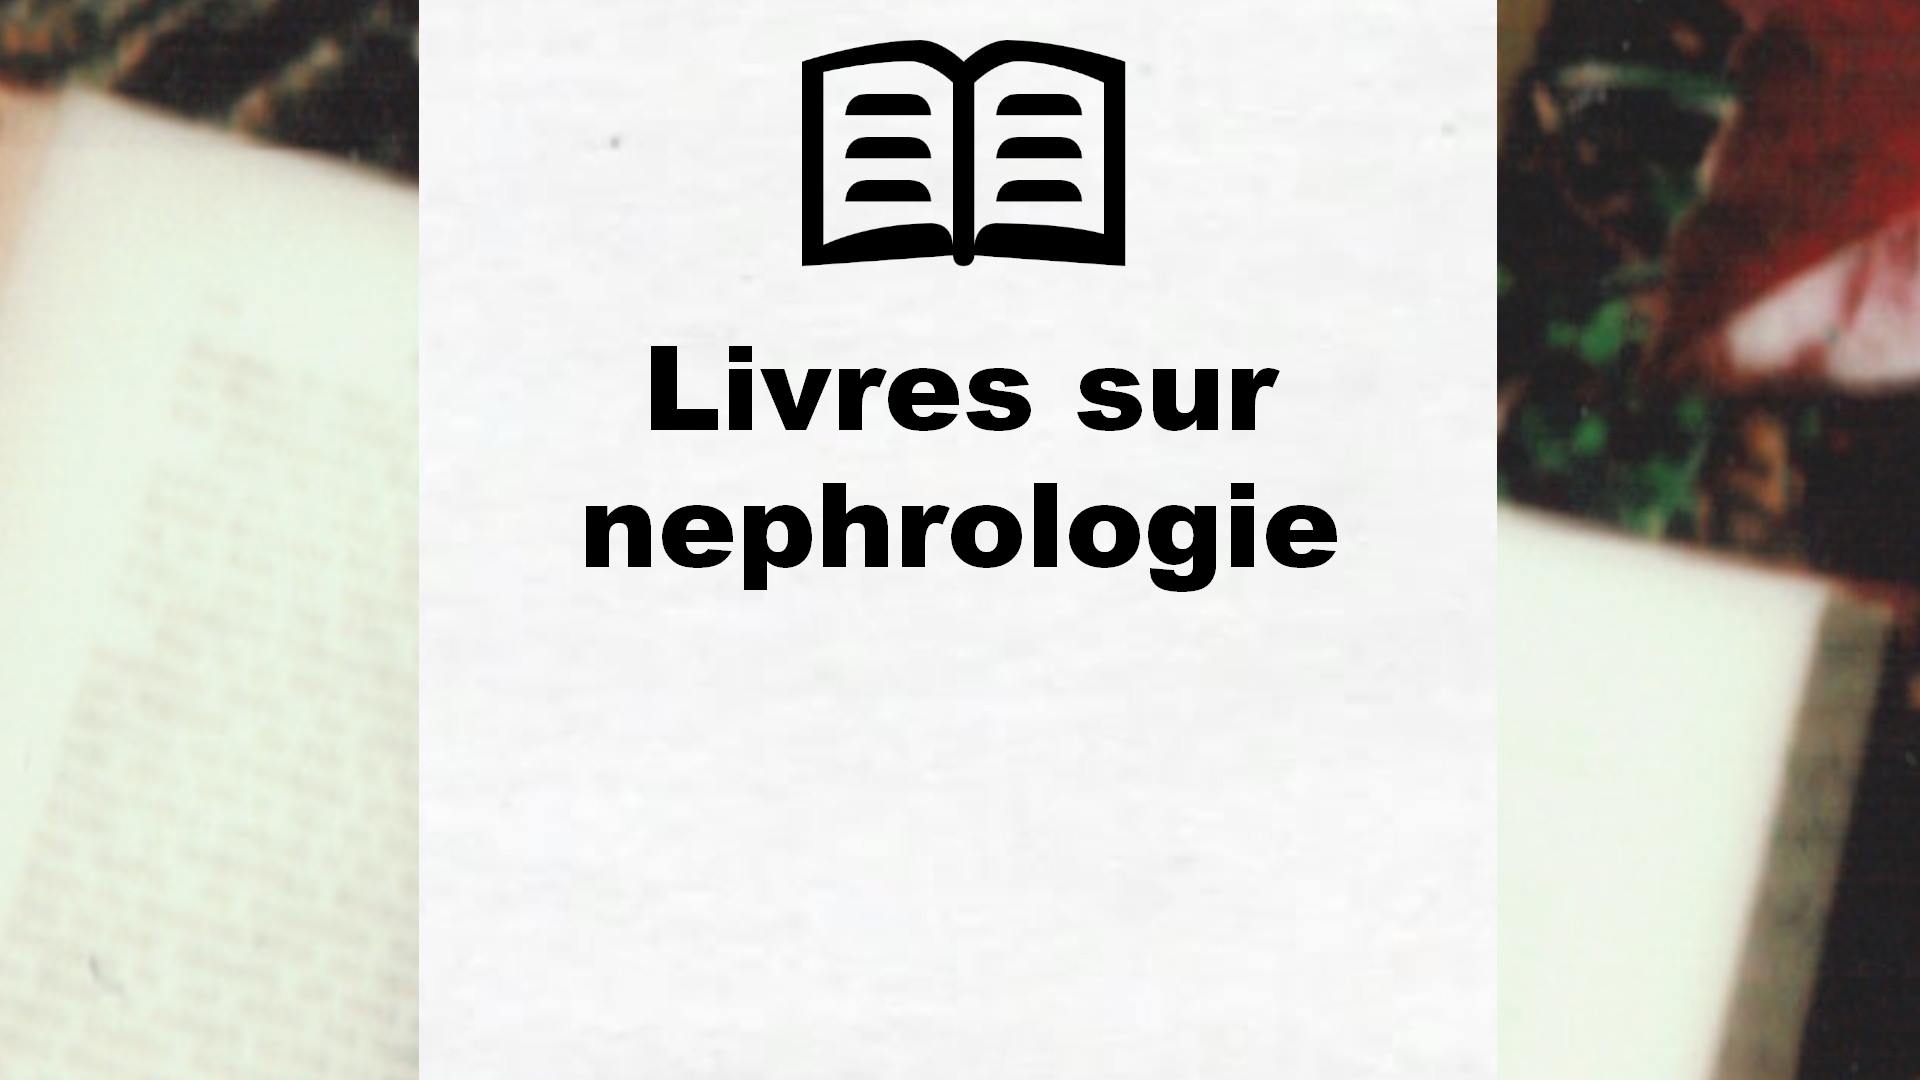 Livres sur nephrologie